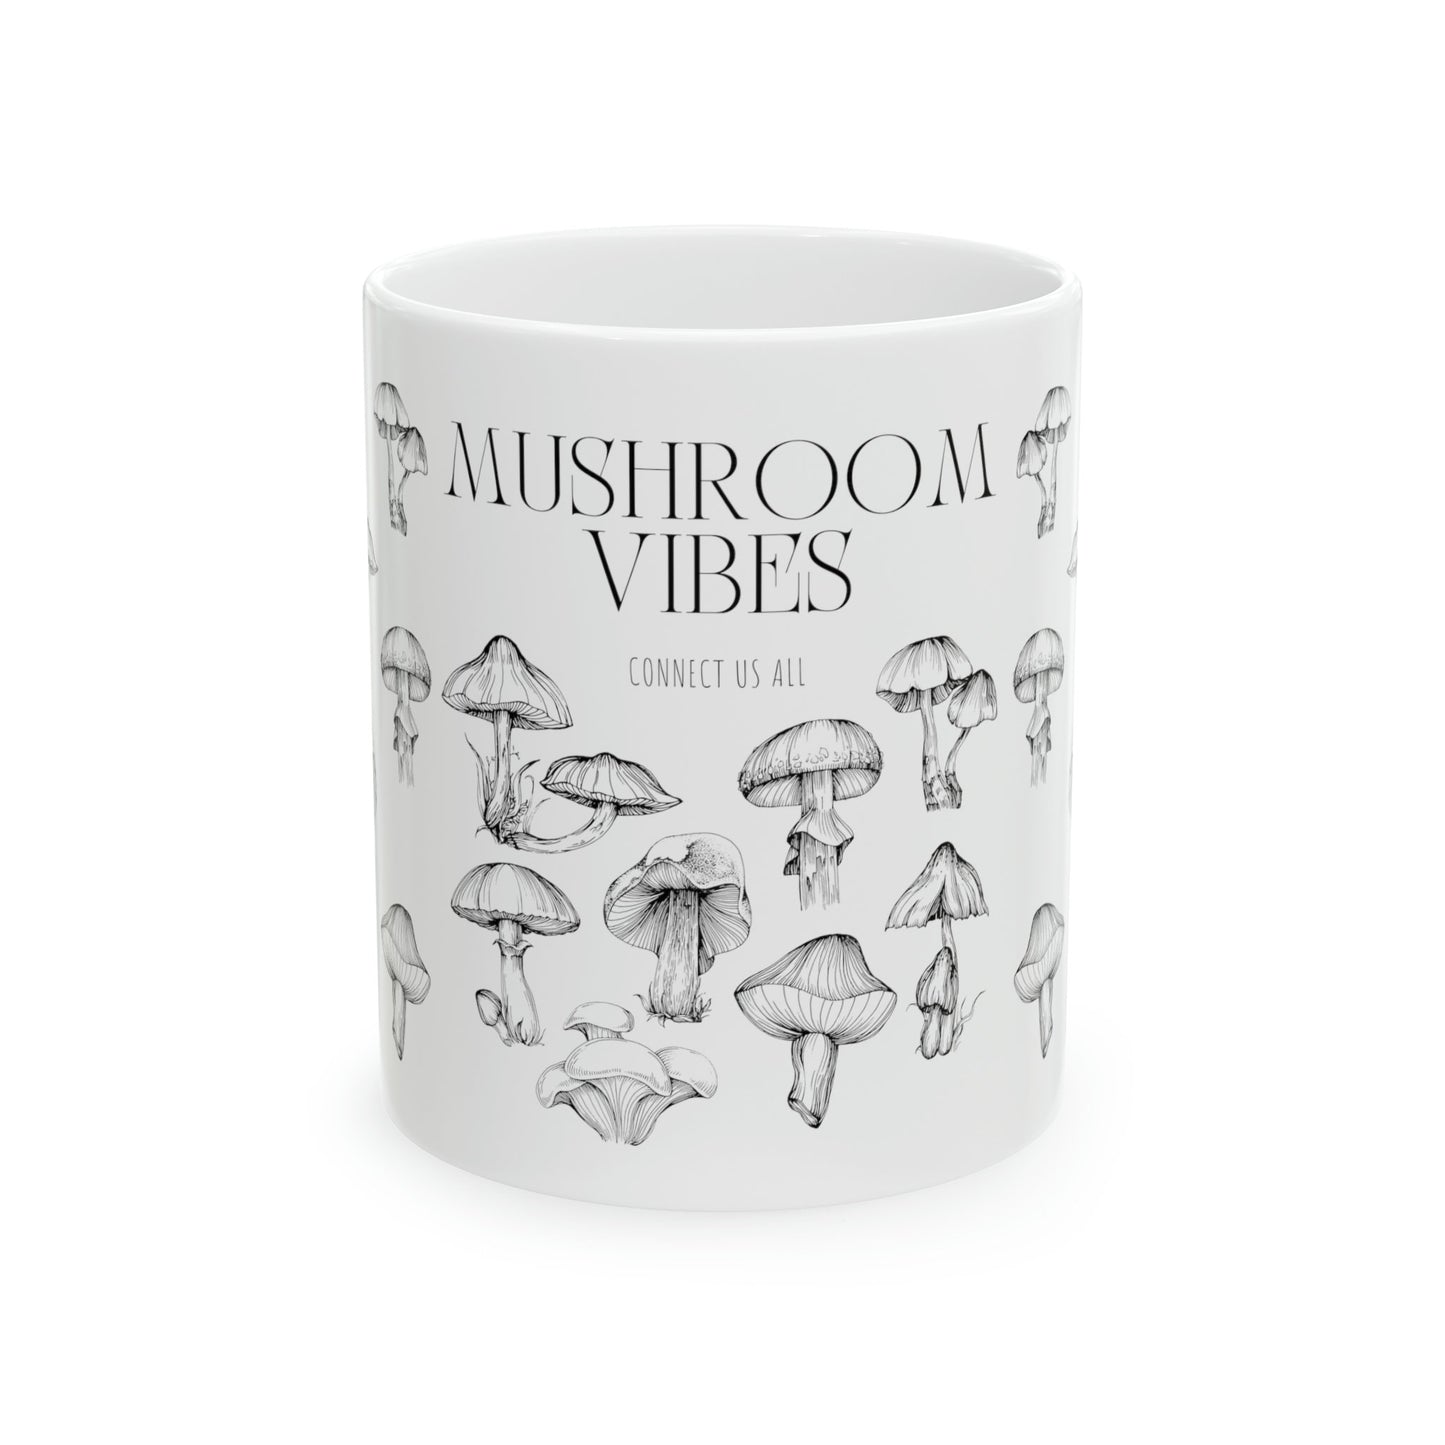 Mushroom Vibes Mug boho coffee mug for women Mushroom funny coffee cup gift for teachers mushroom top shroom enthusiast artistic kitchen cup